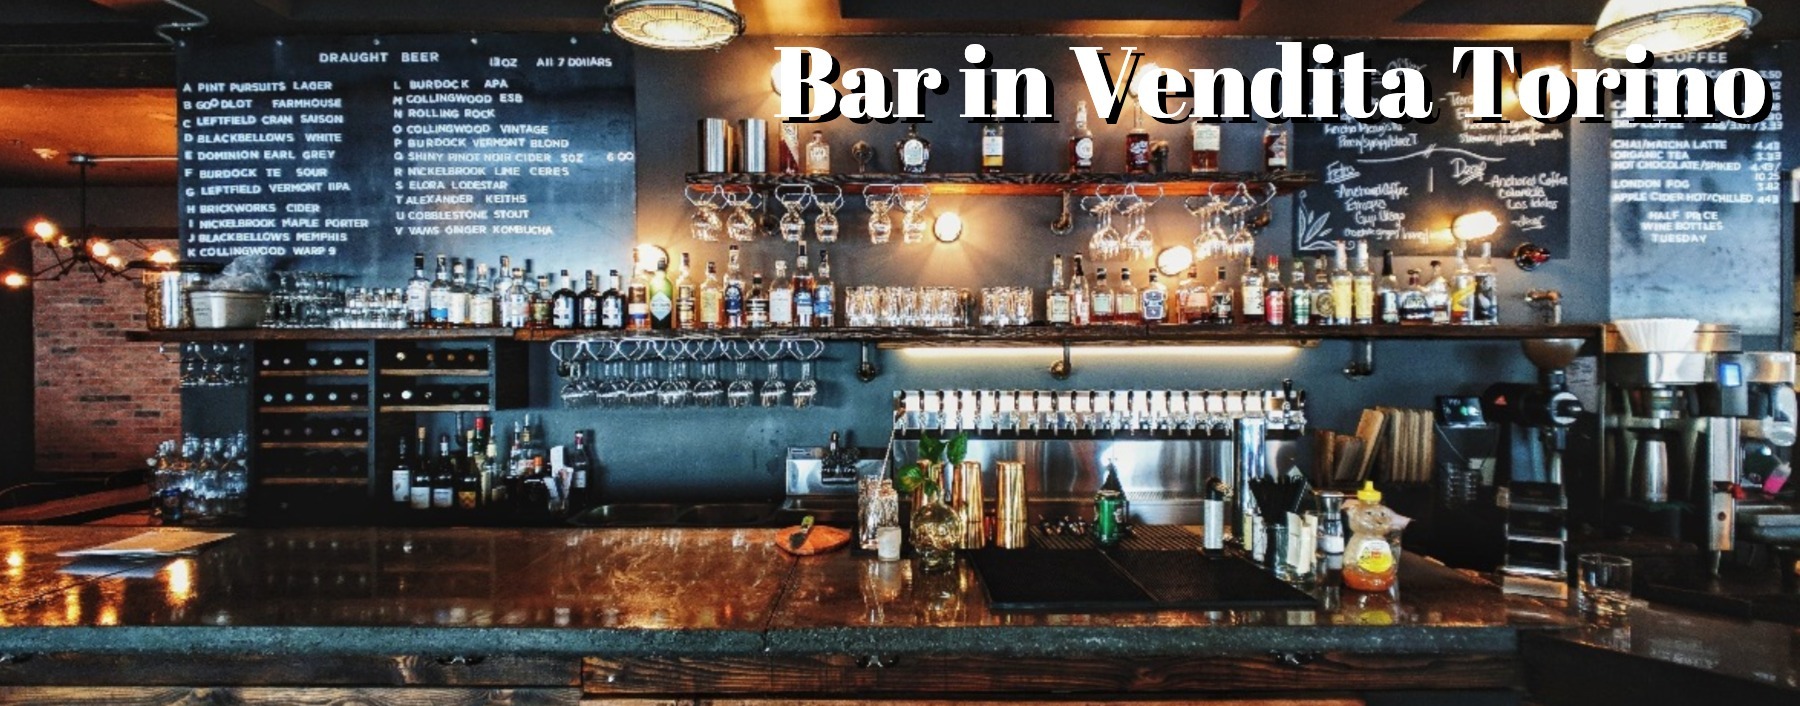 Bar in Vendita Torino